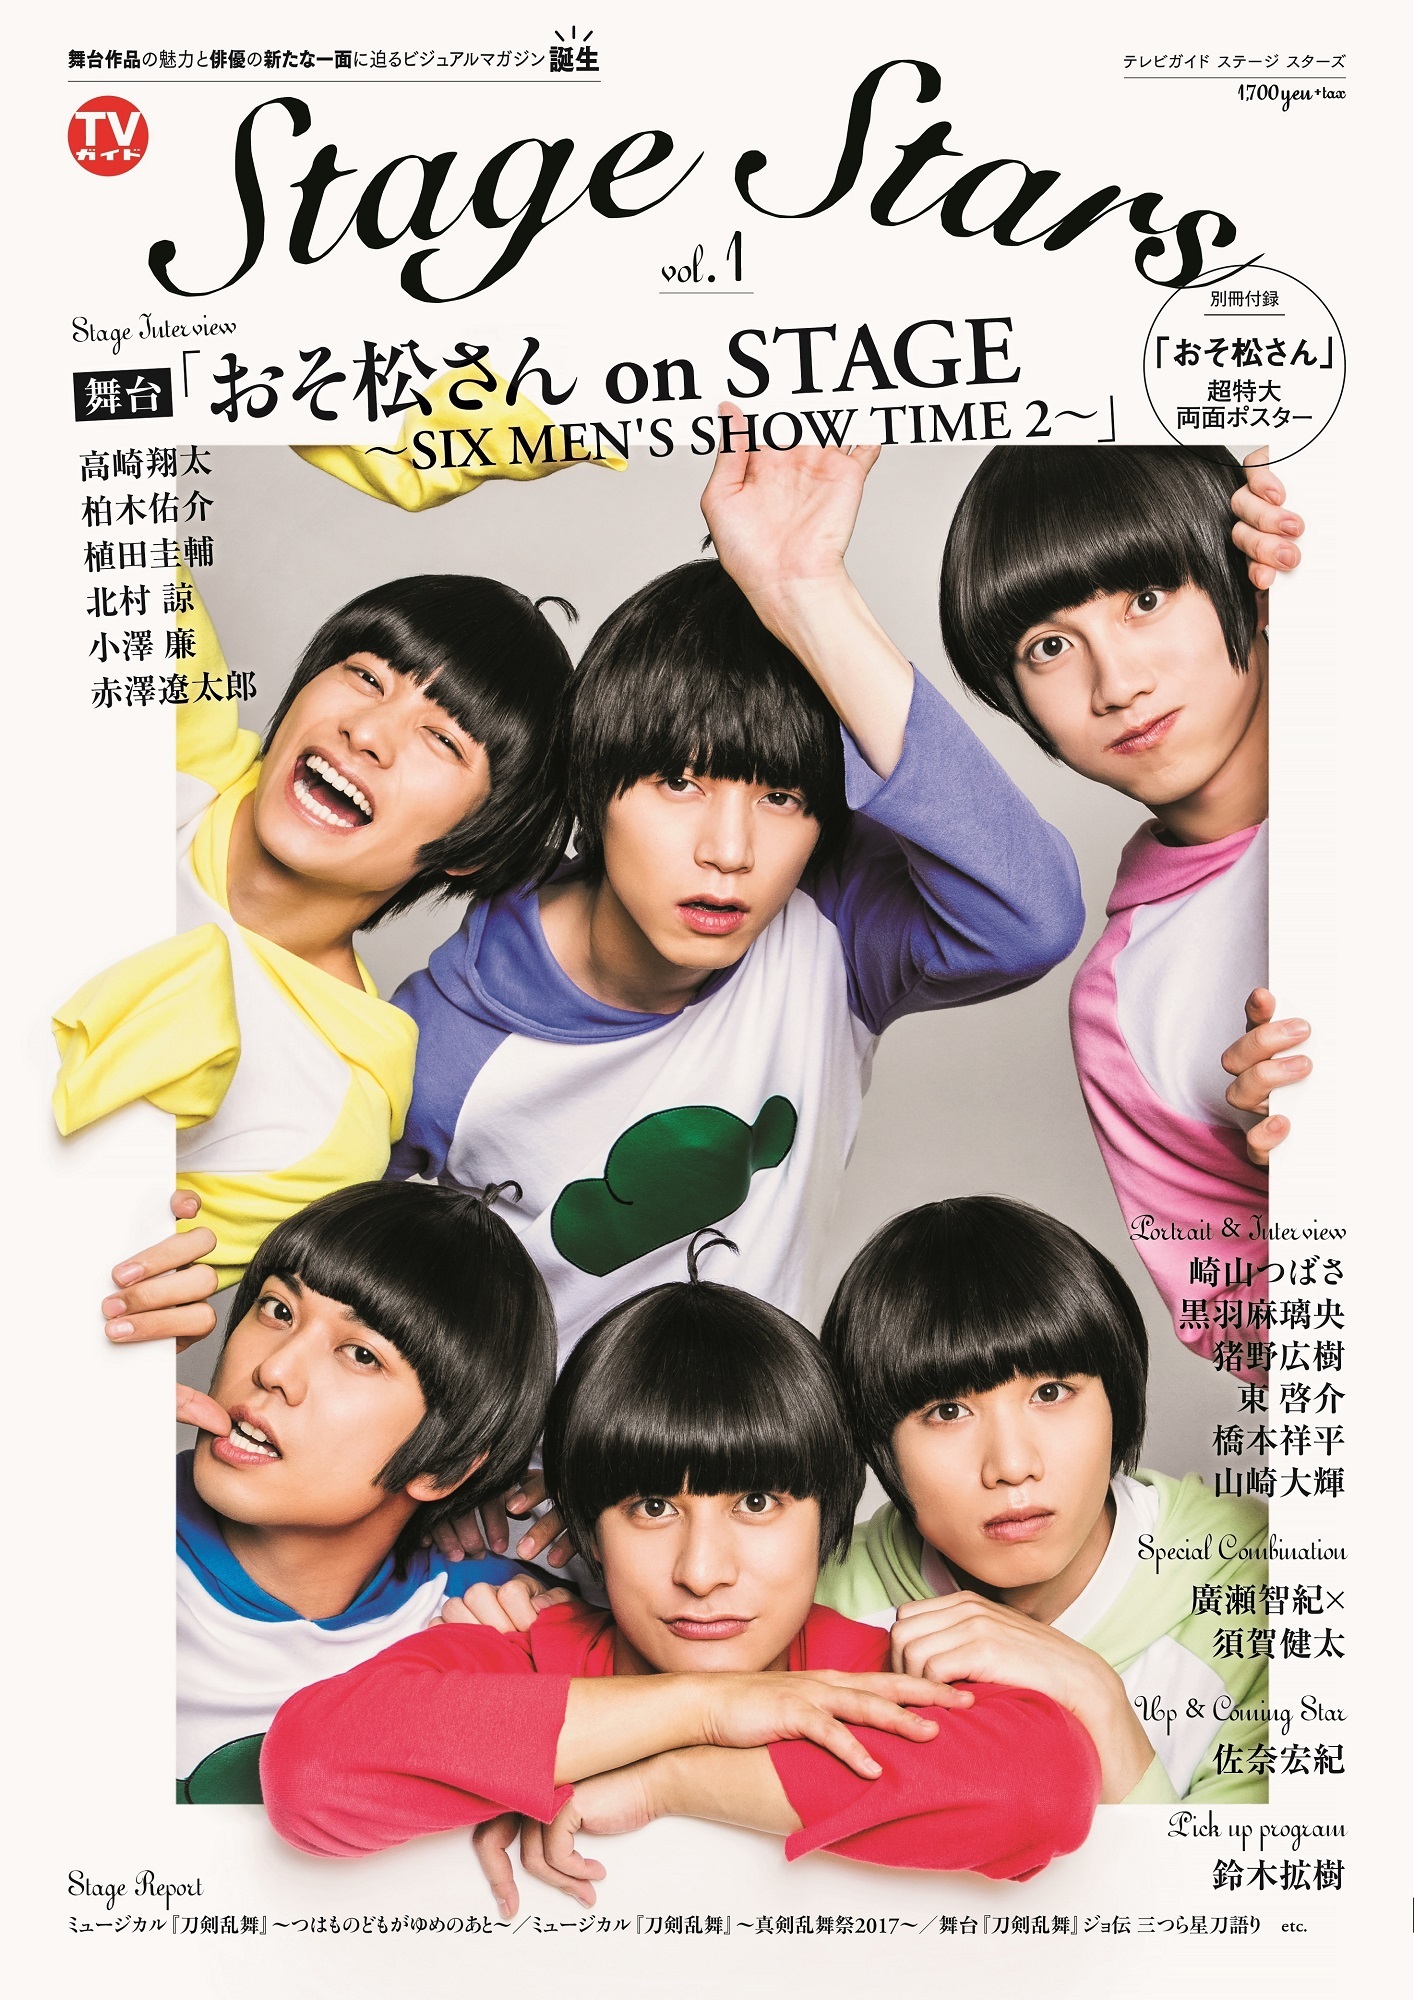 「TVガイド Stage Stars vol.1」 （東京ニュース通信社刊）